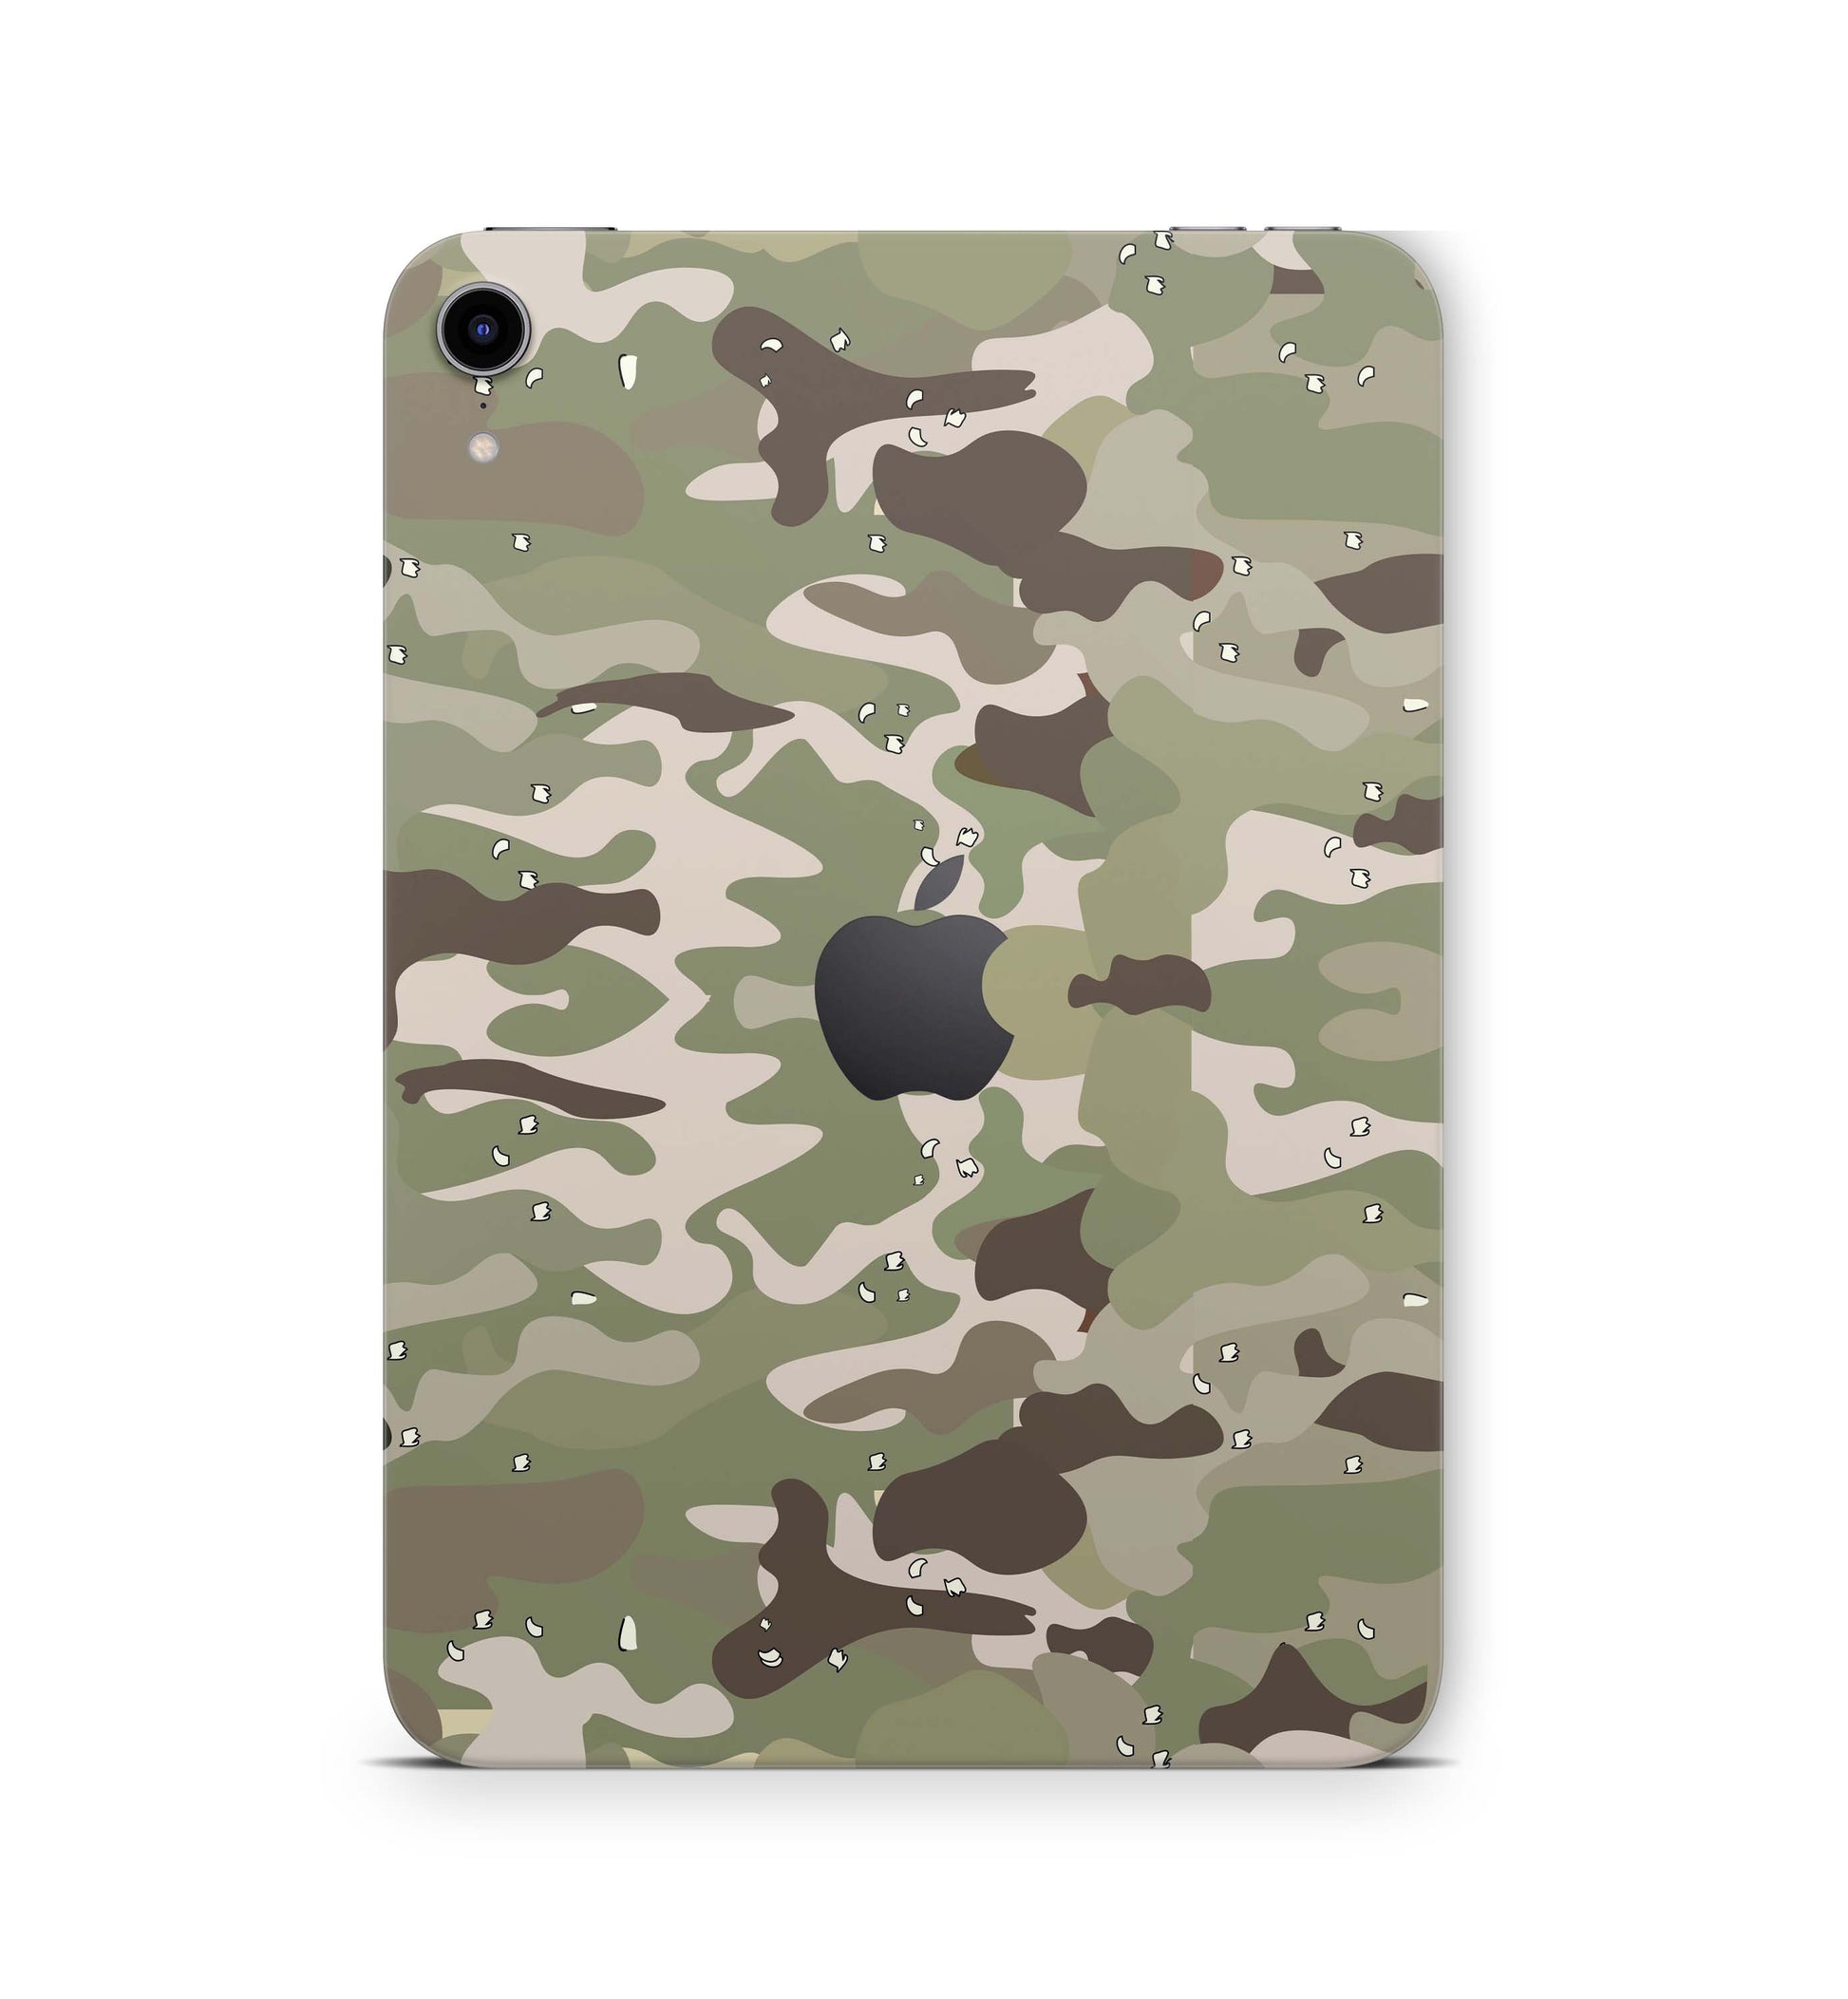 Apple iPad Skin Design Cover Folie Vinyl Skins & Wraps für alle iPad Modelle Aufkleber Skins4u FC-Camo  